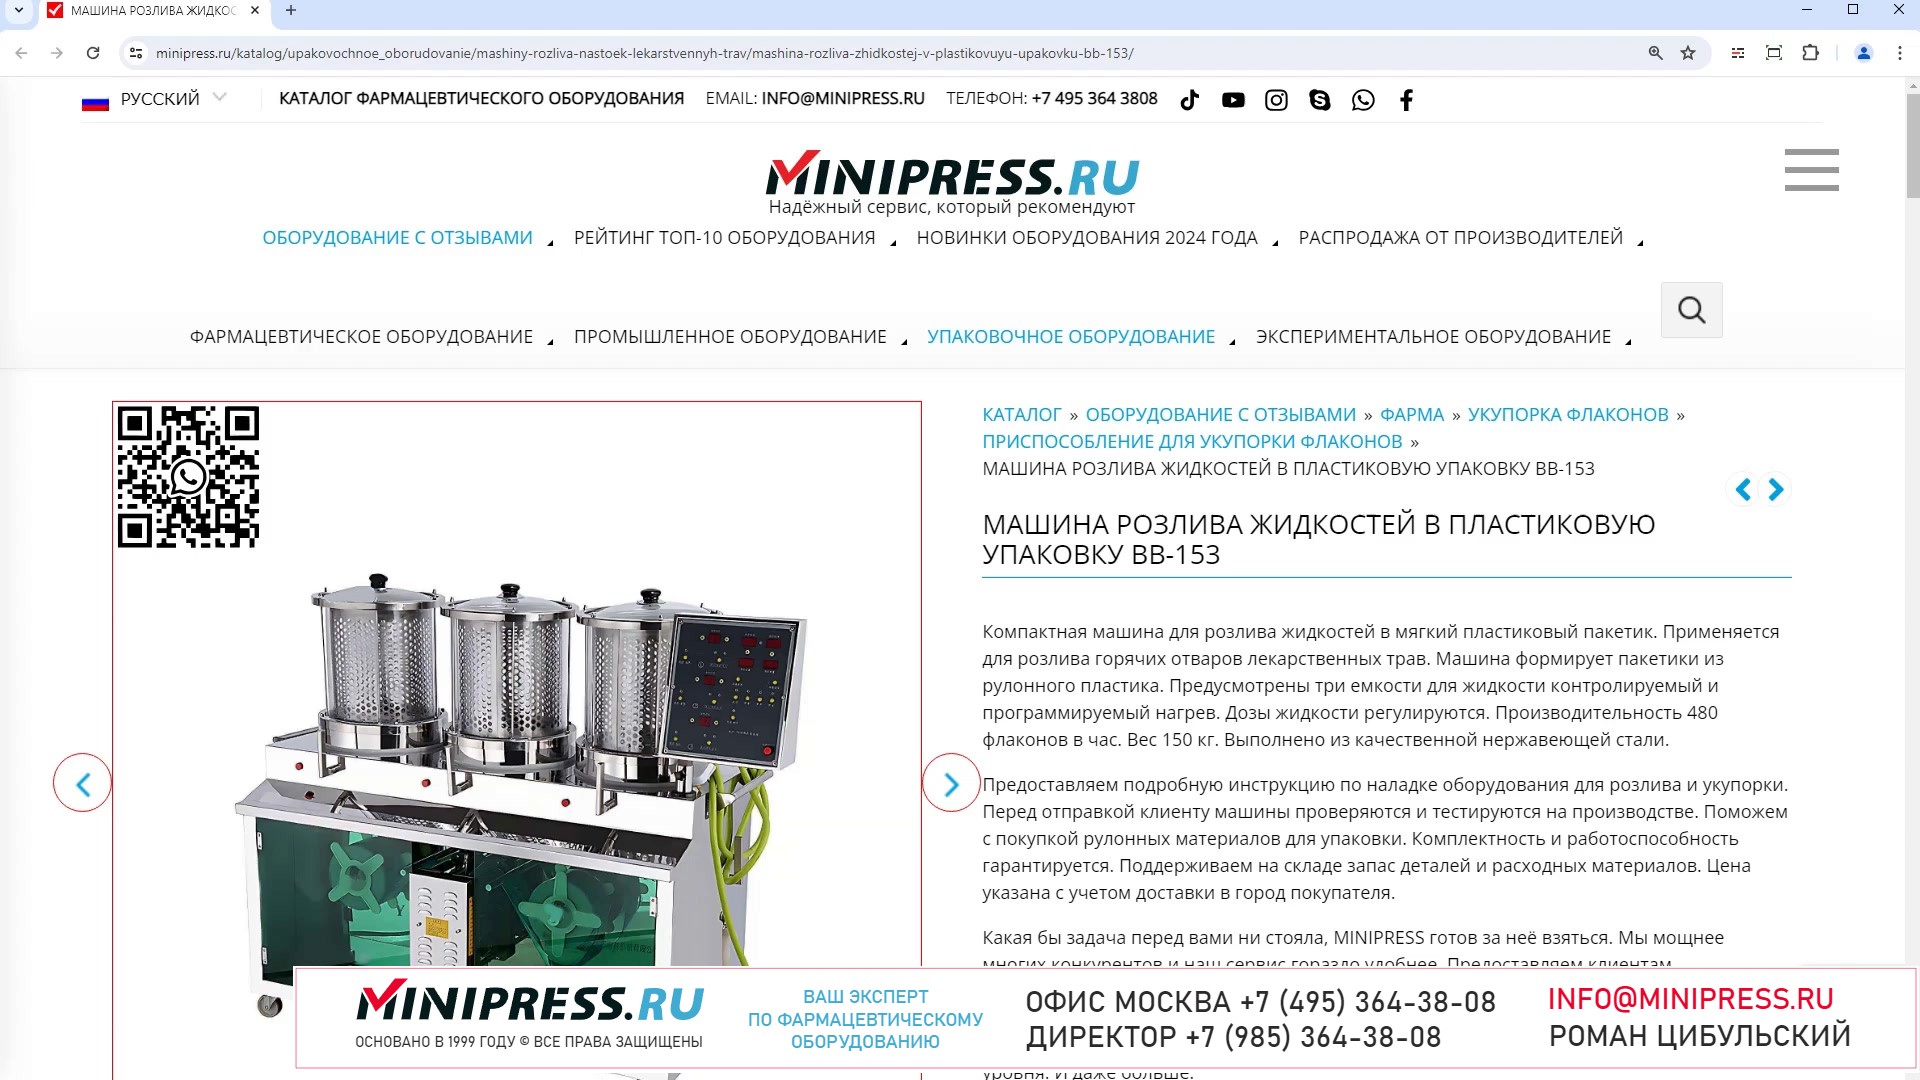 Minipress.ru Машина розлива жидкостей в пластиковую упаковку BB-153